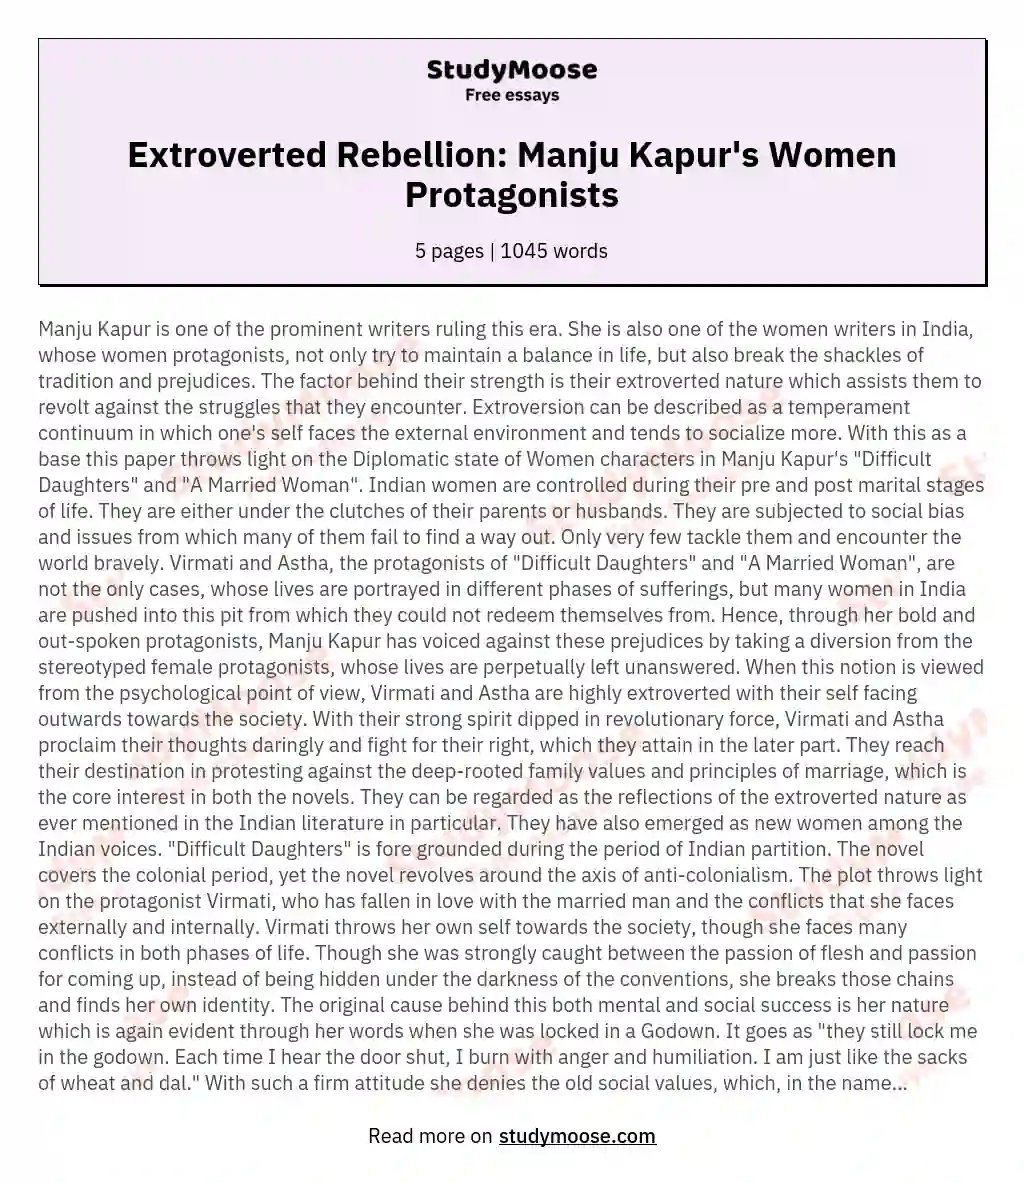 Extroverted Rebellion: Manju Kapur's Women Protagonists essay